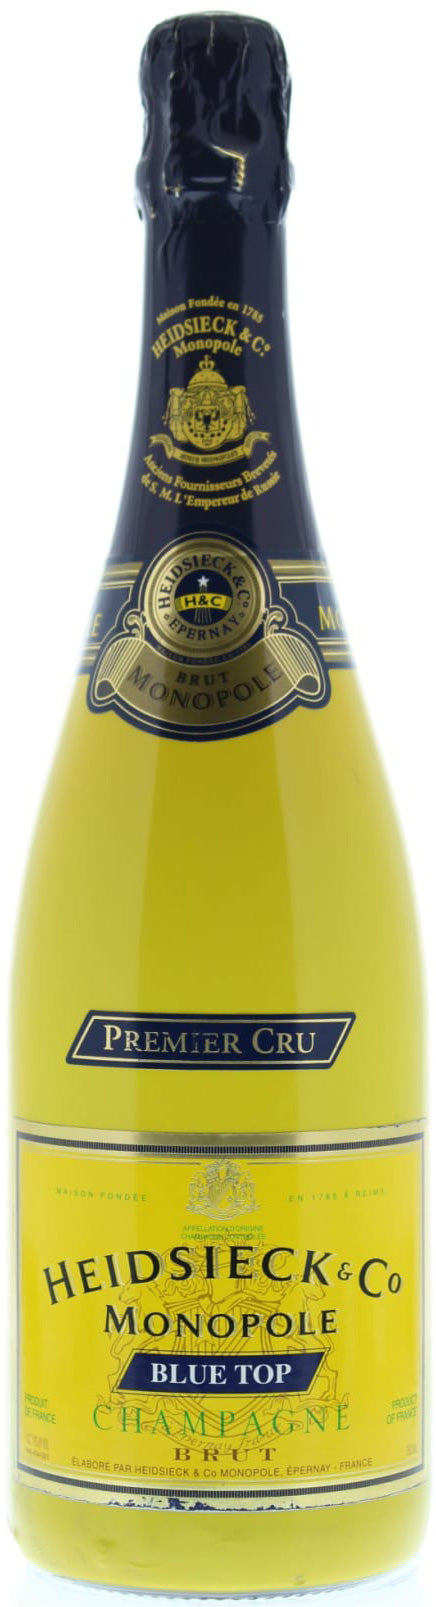 Heidsieck & Co. Monopole Champagne Brut Premier Cru